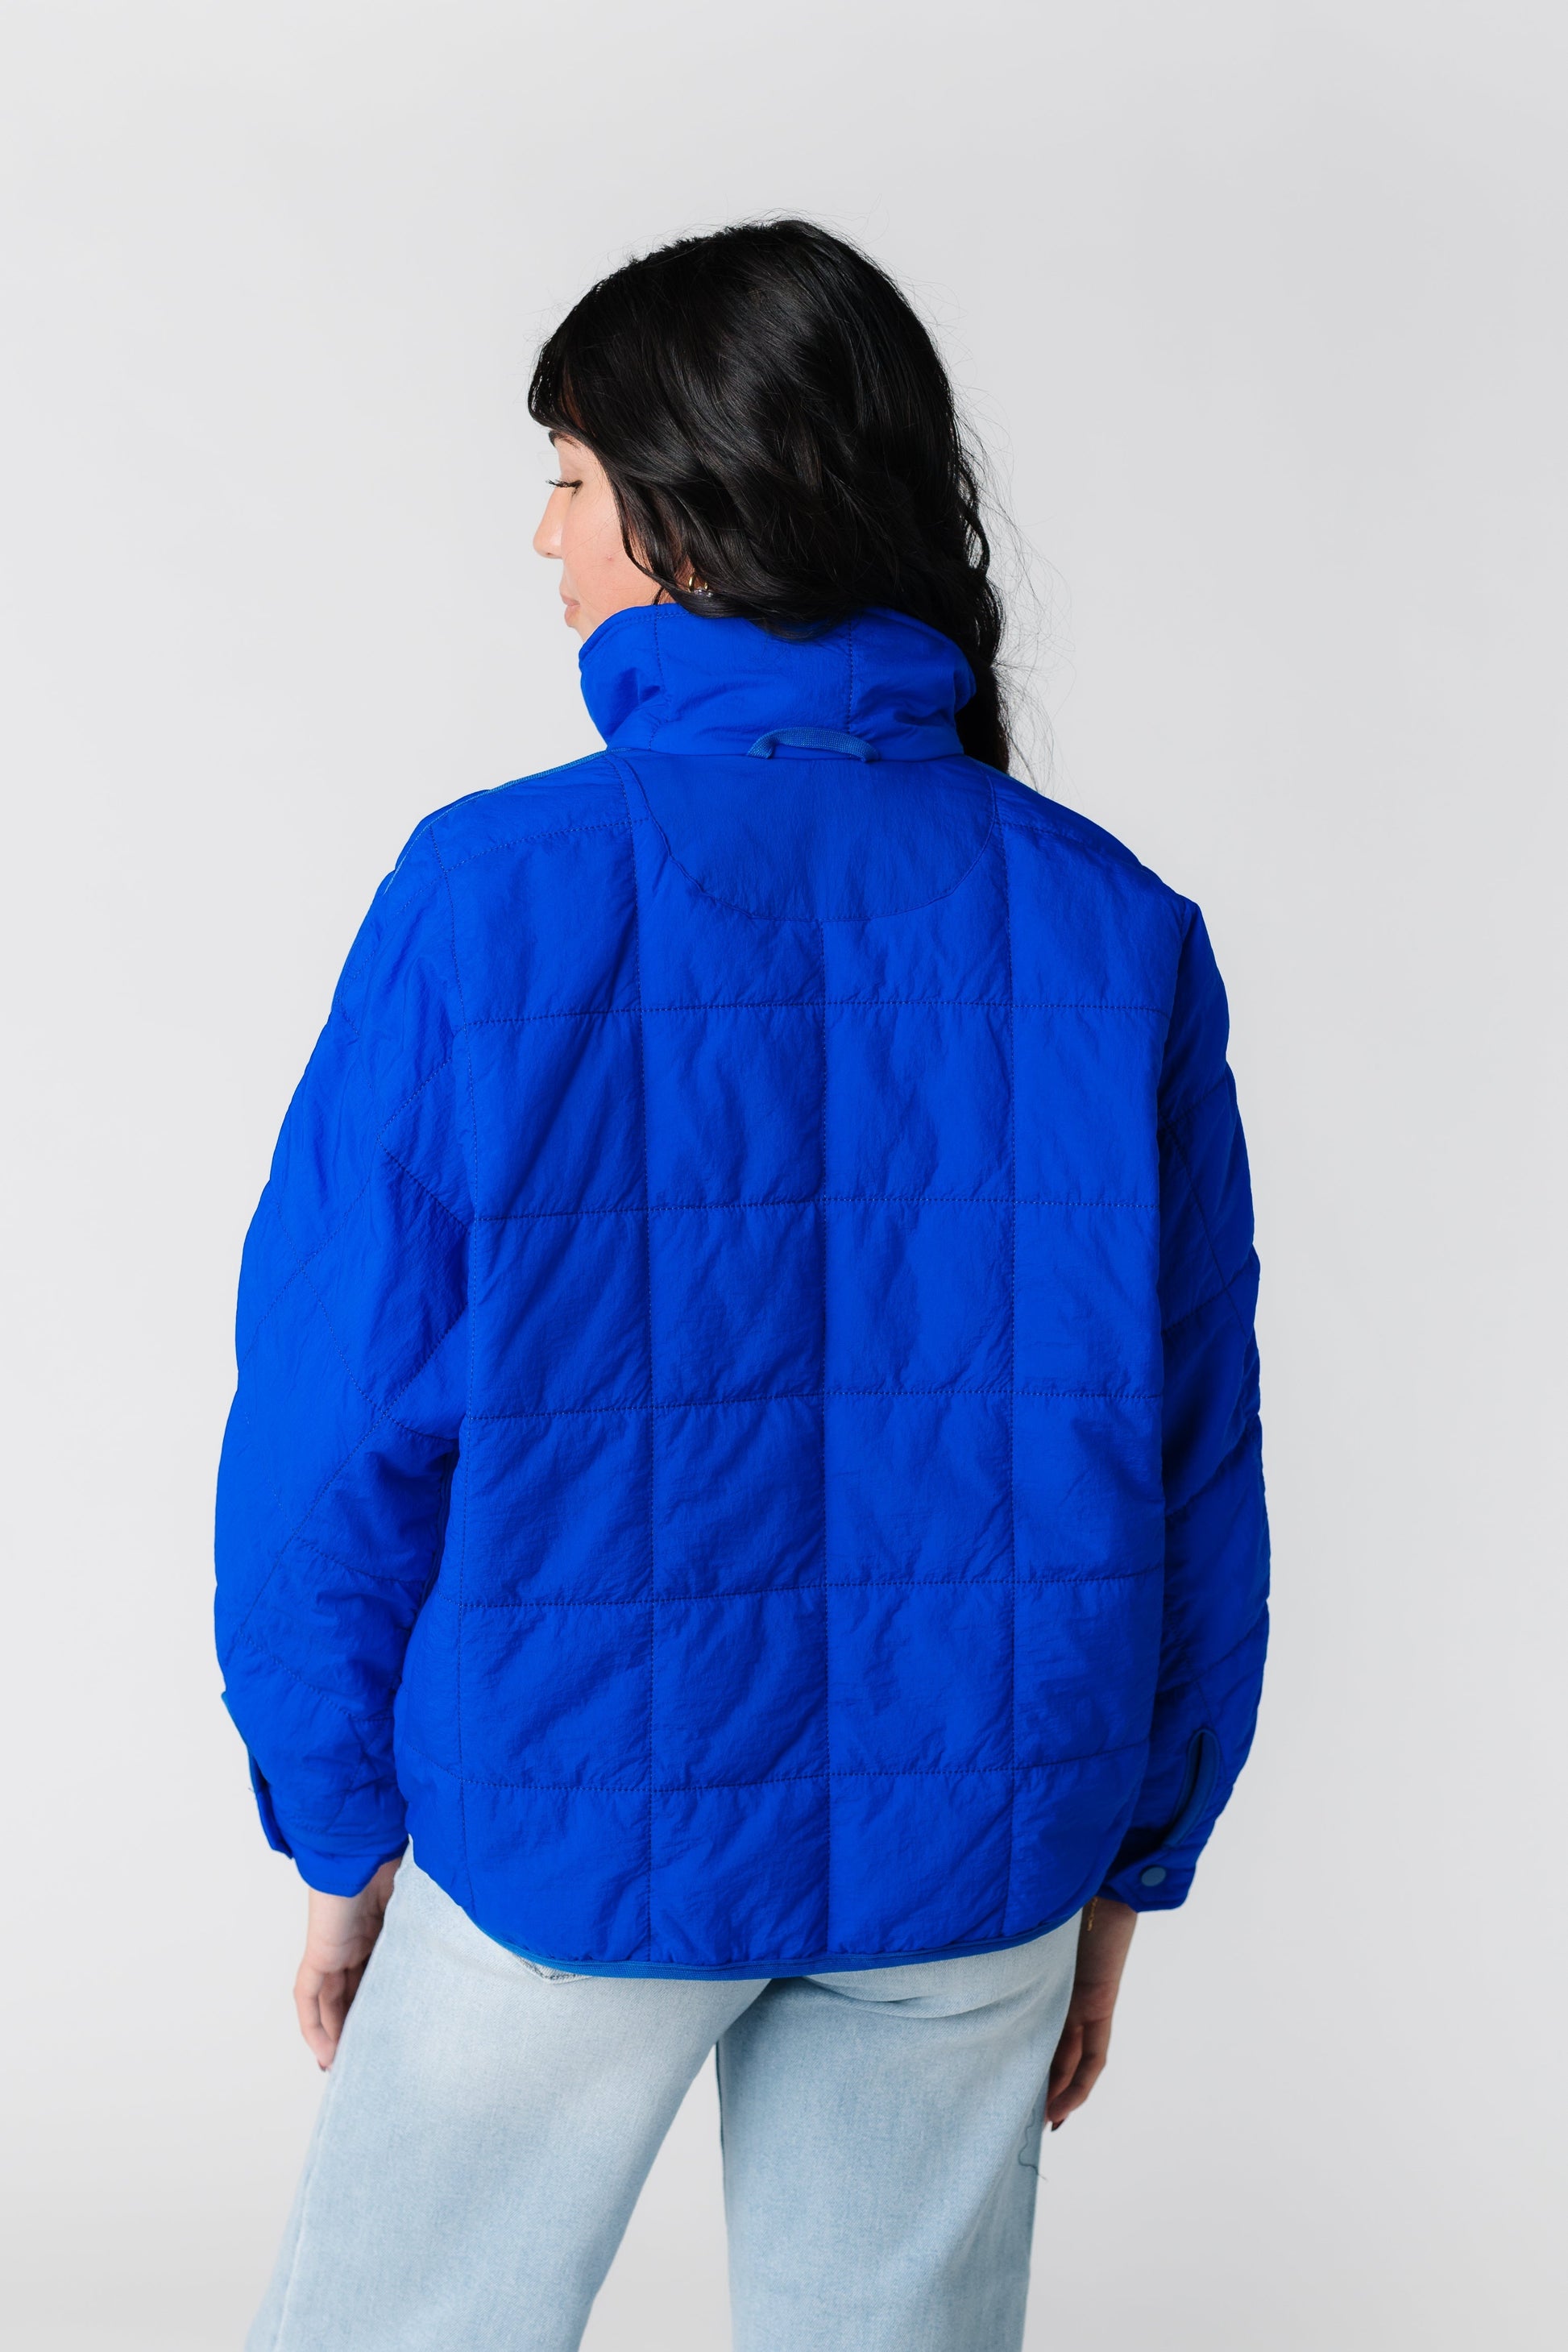 Pippie Packable Puffer Jacket - Royal Blue WOMEN'S JACKETS Veveret 